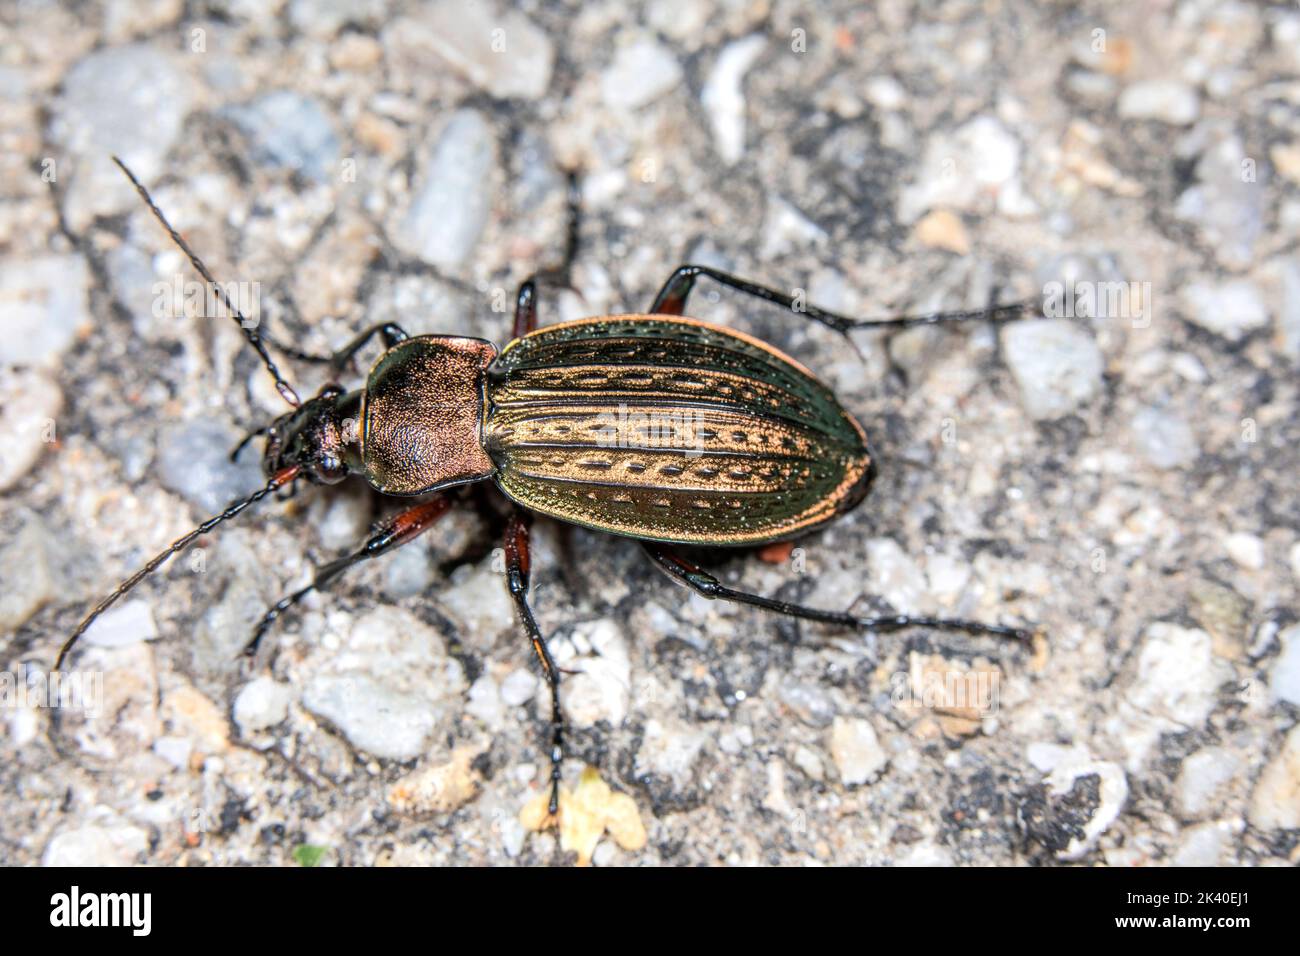 Cancellate ground beetle (Carabus cancellatus, Tachypus cancellatus), on stony ground, Germany Stock Photo